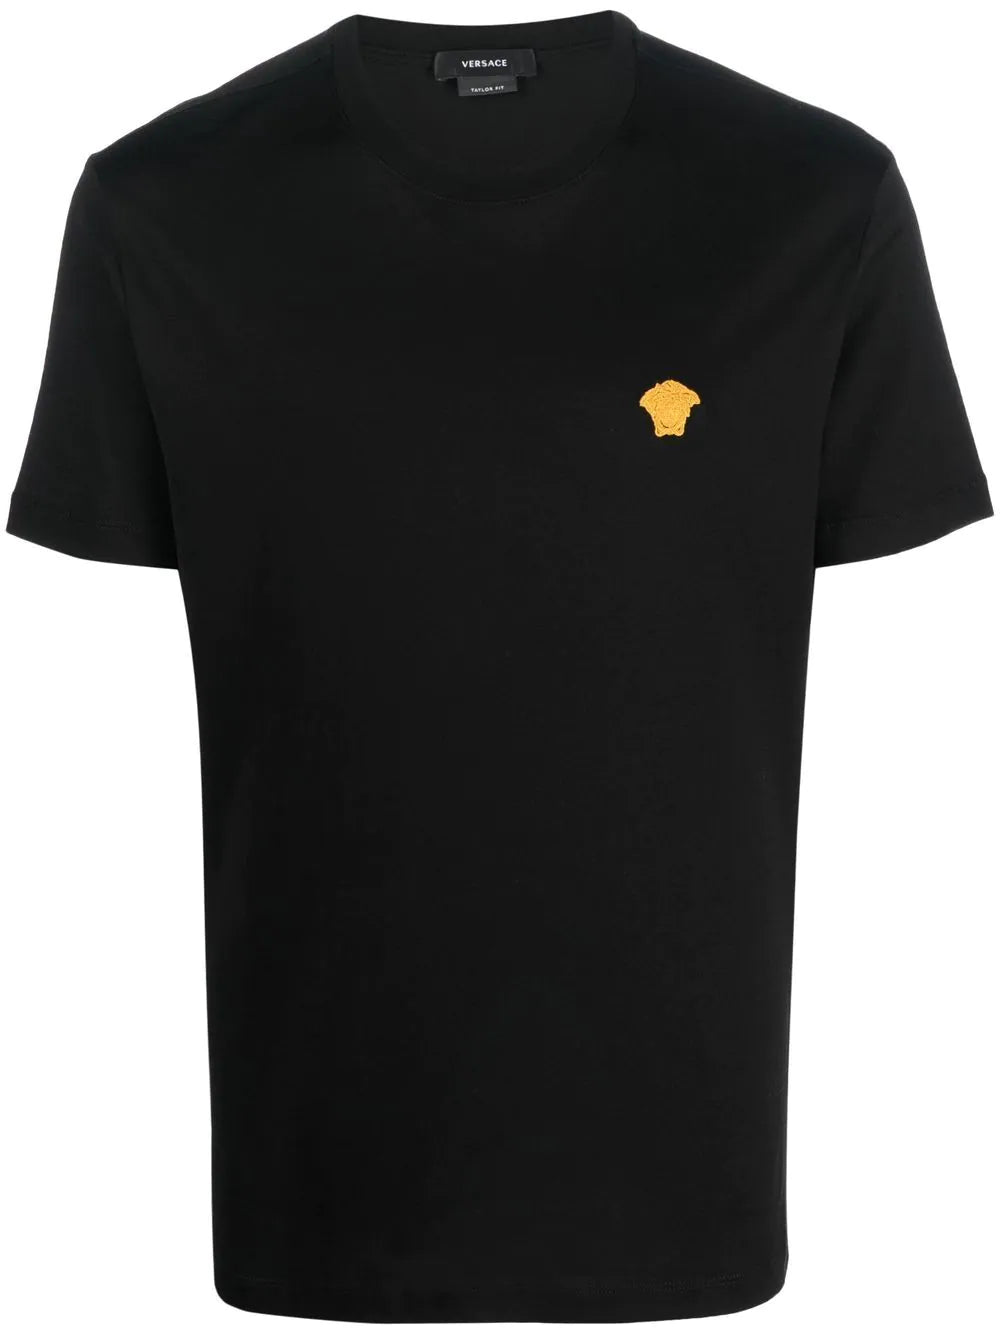 Versace Black T-shirt with Gold Medusa